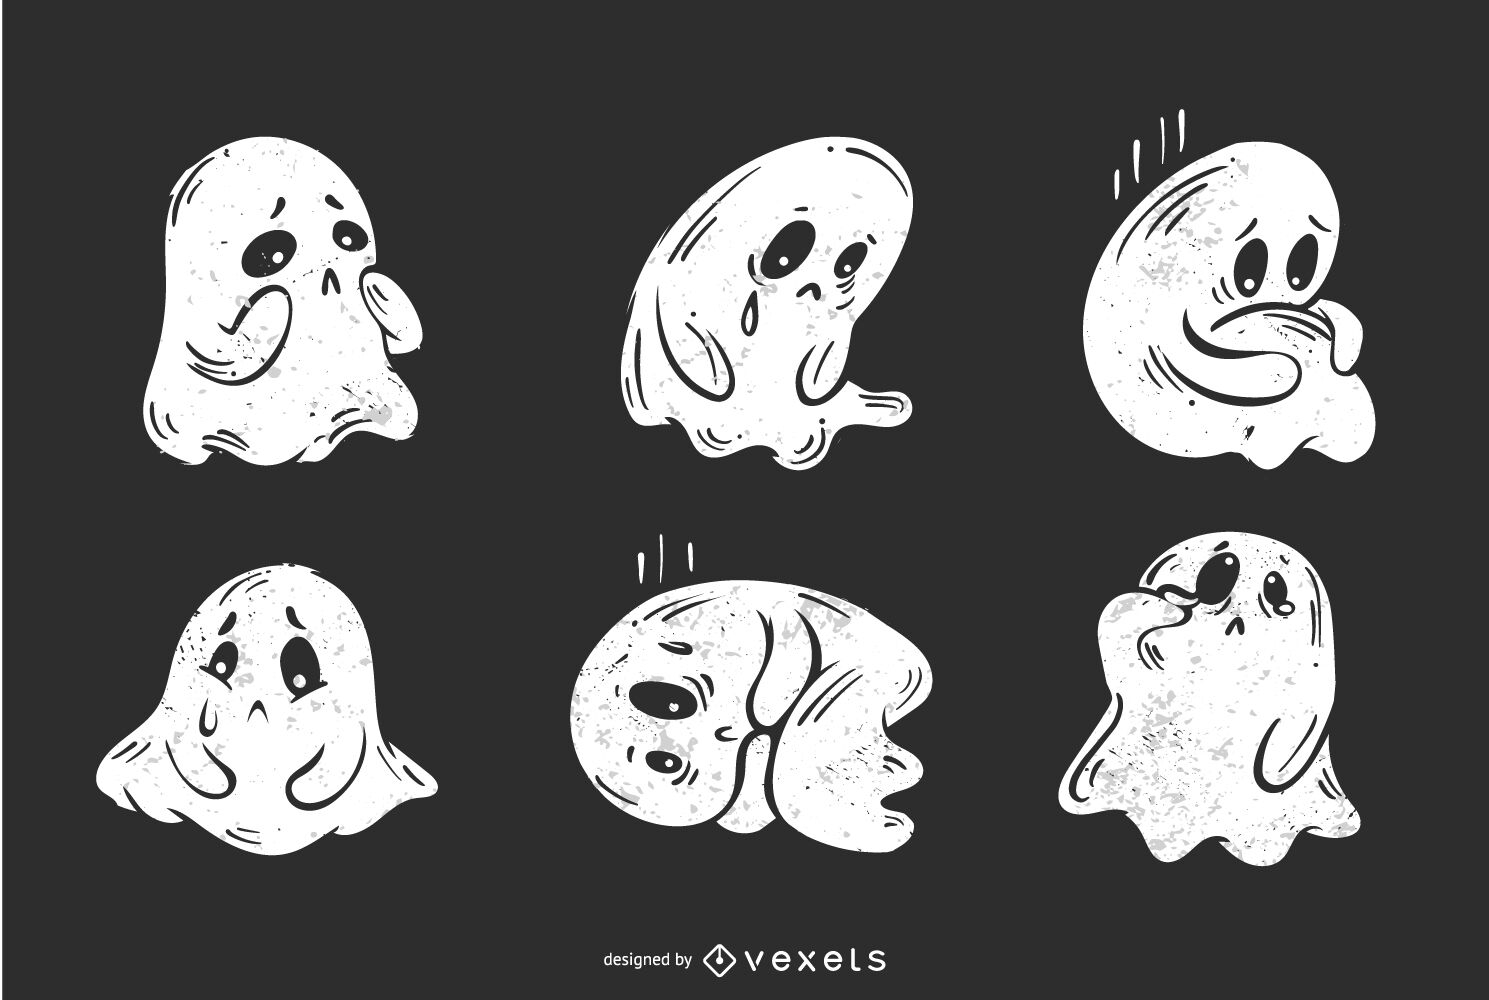 Sad ghost spirits cartoon character set